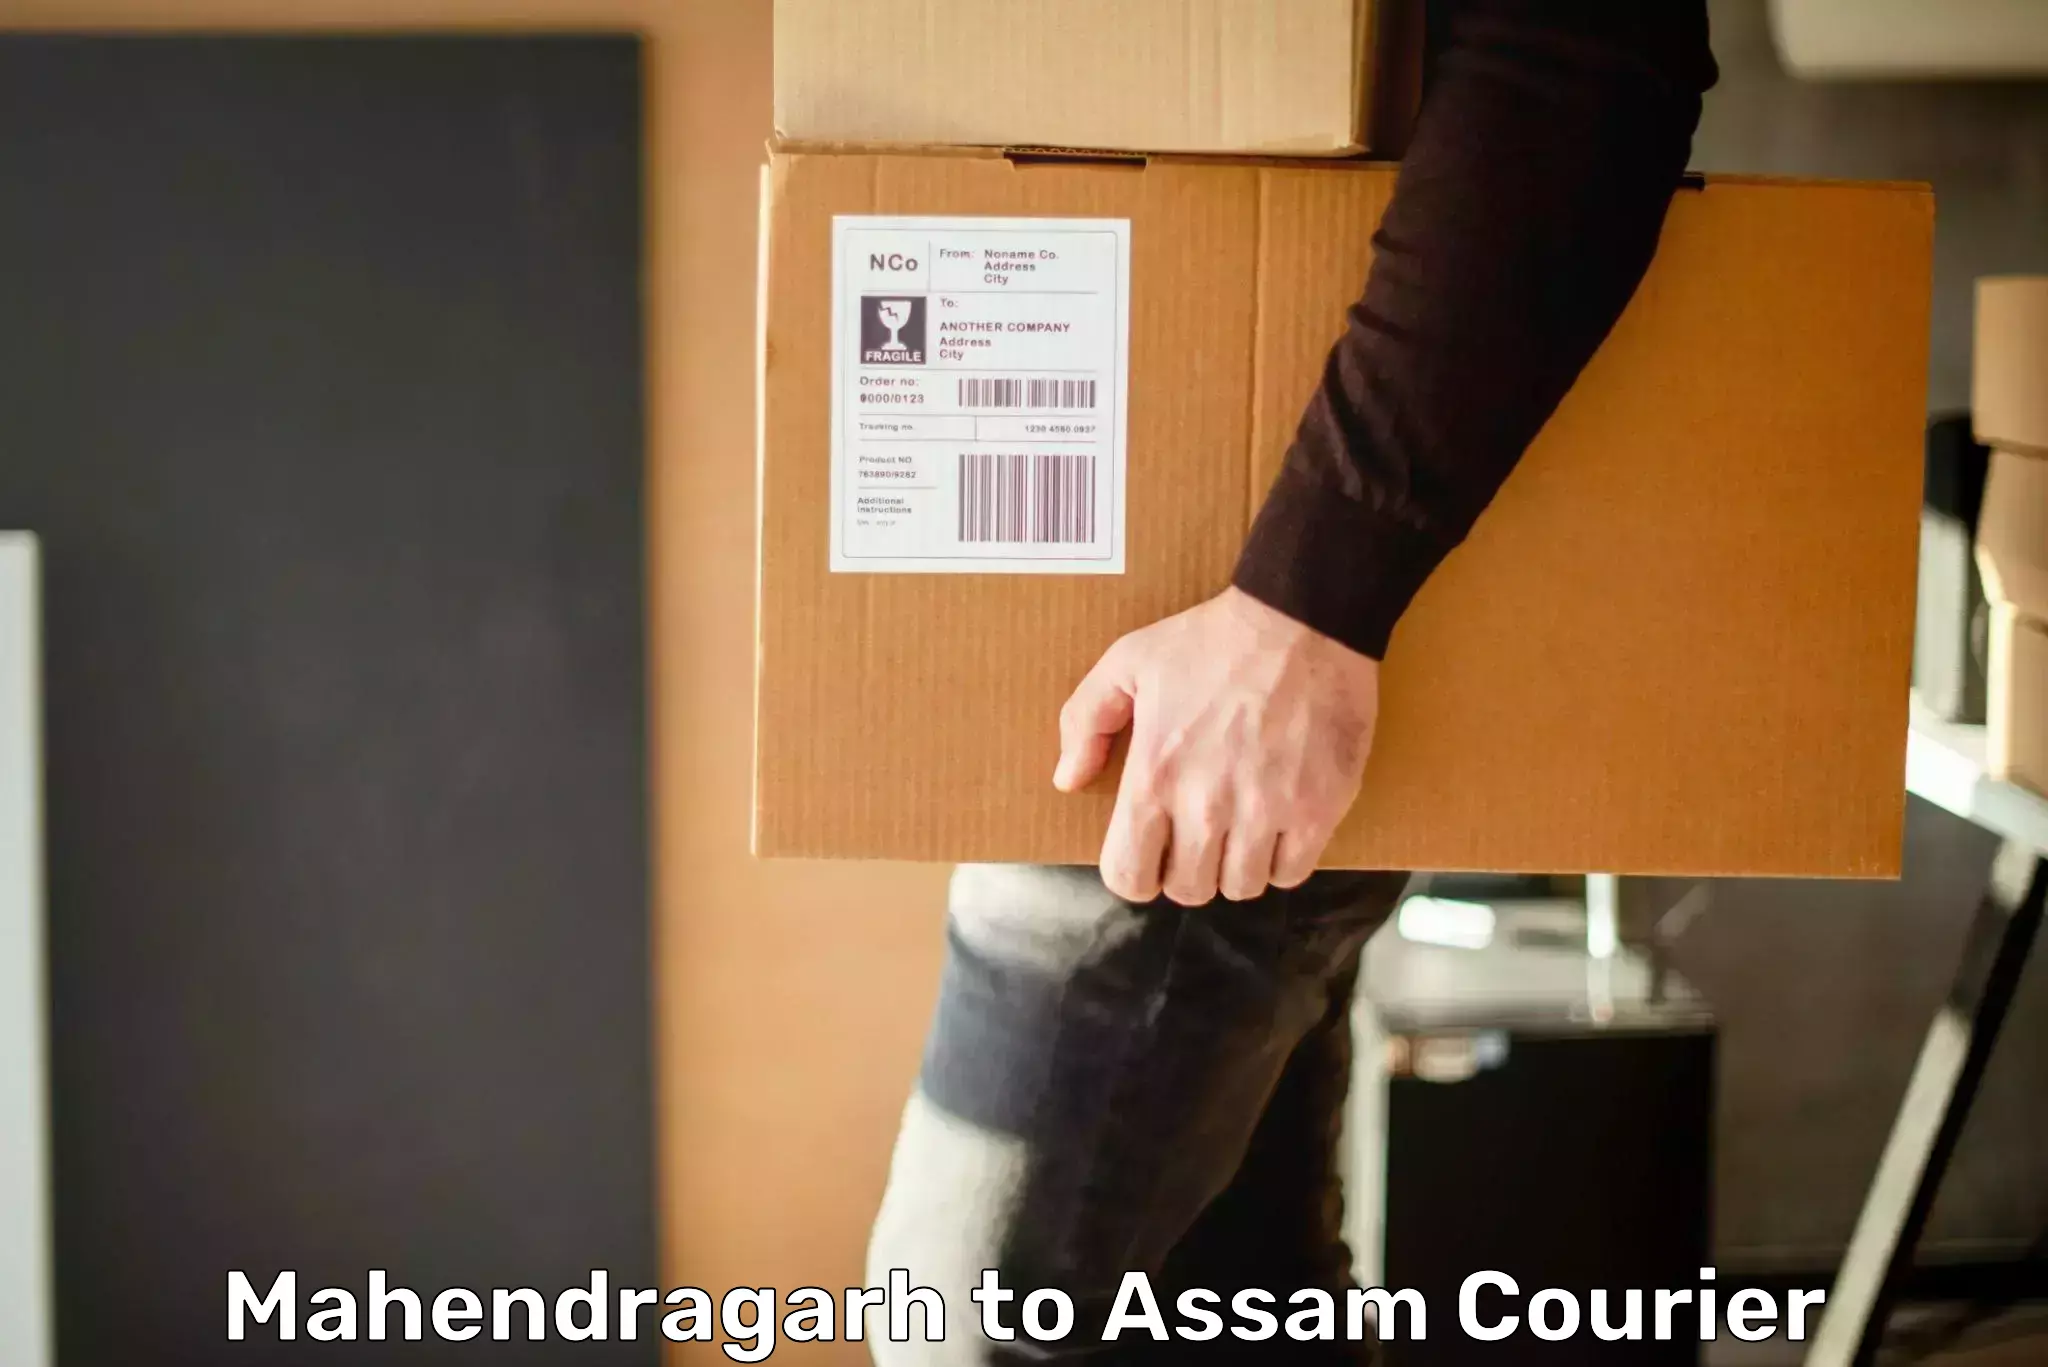 User-friendly delivery service Mahendragarh to Behali